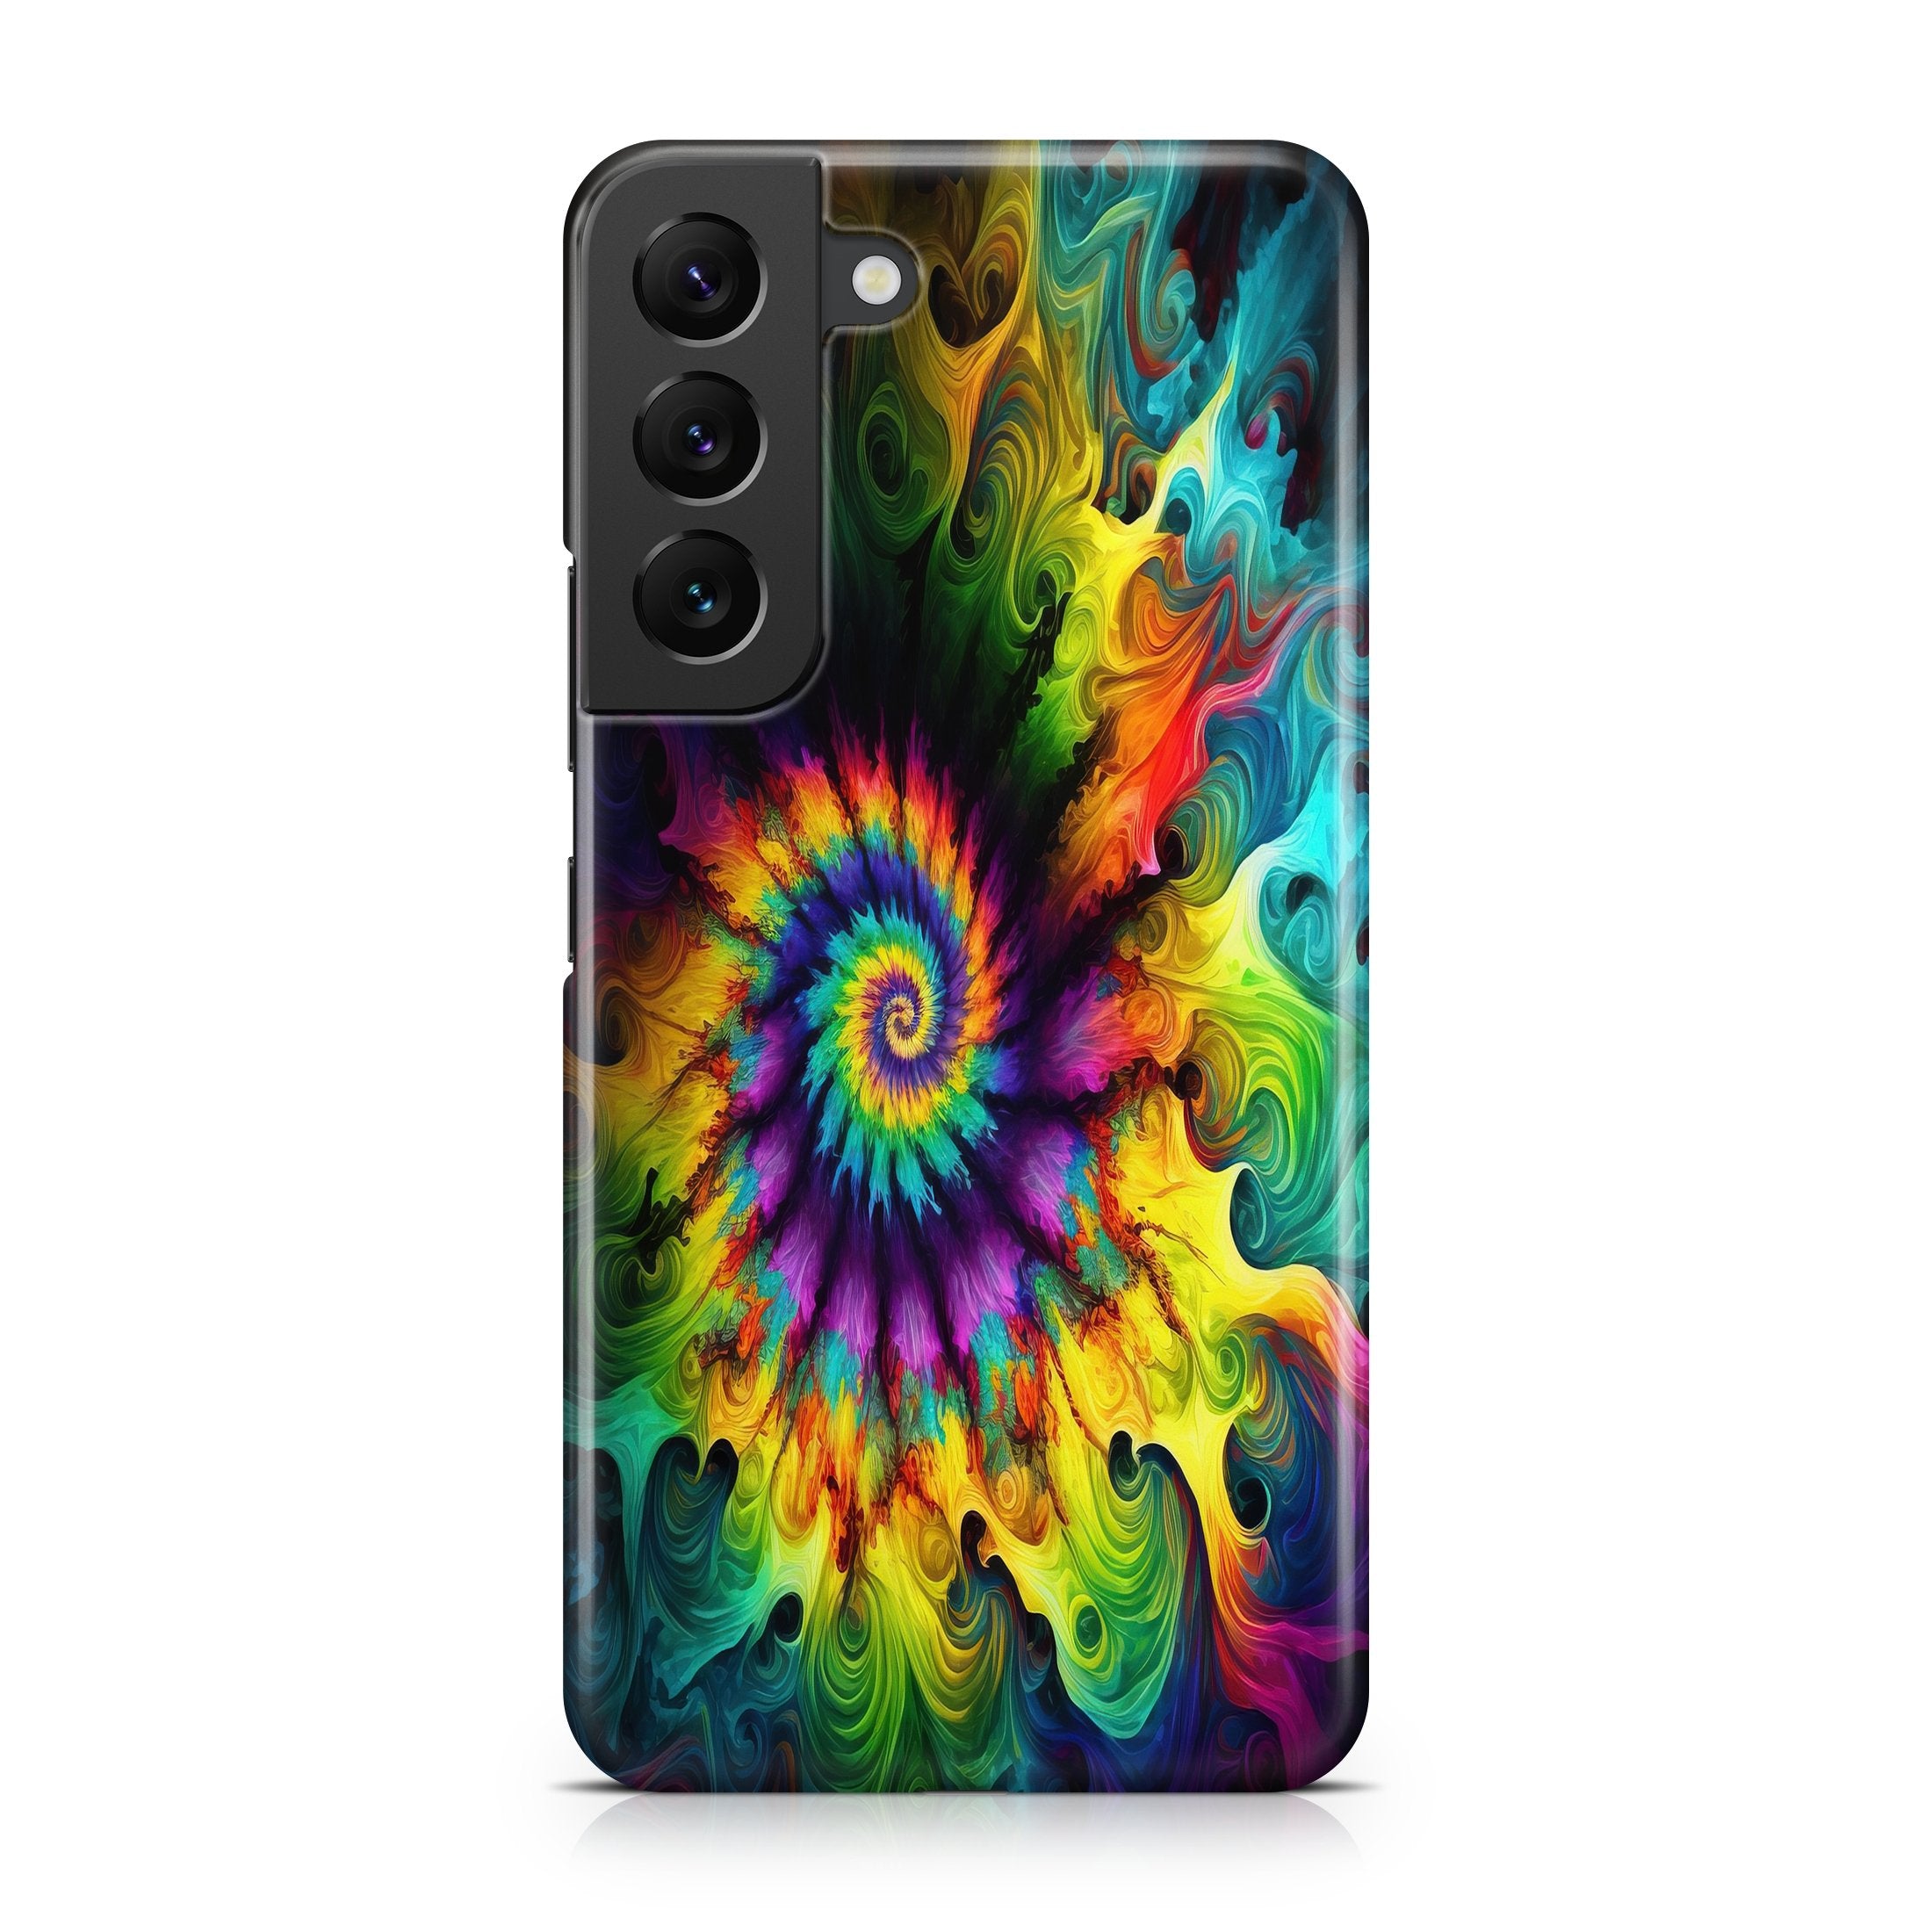 Myst Spiral - Samsung phone case designs by CaseSwagger